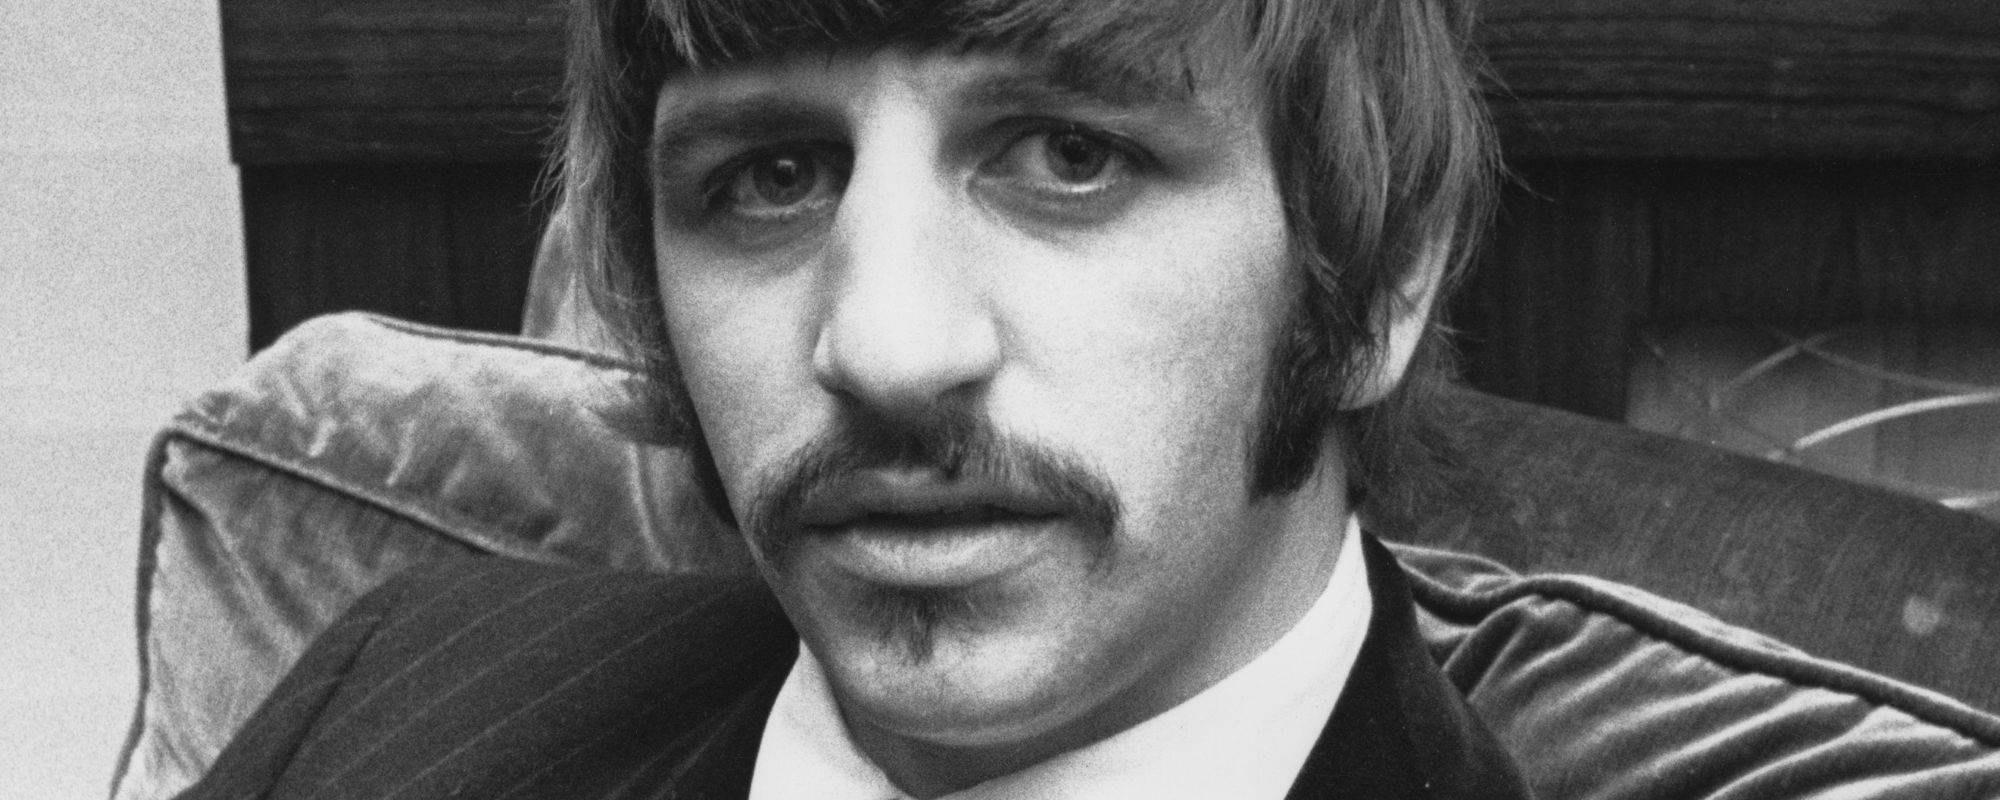 Ringo Starr looks at camera